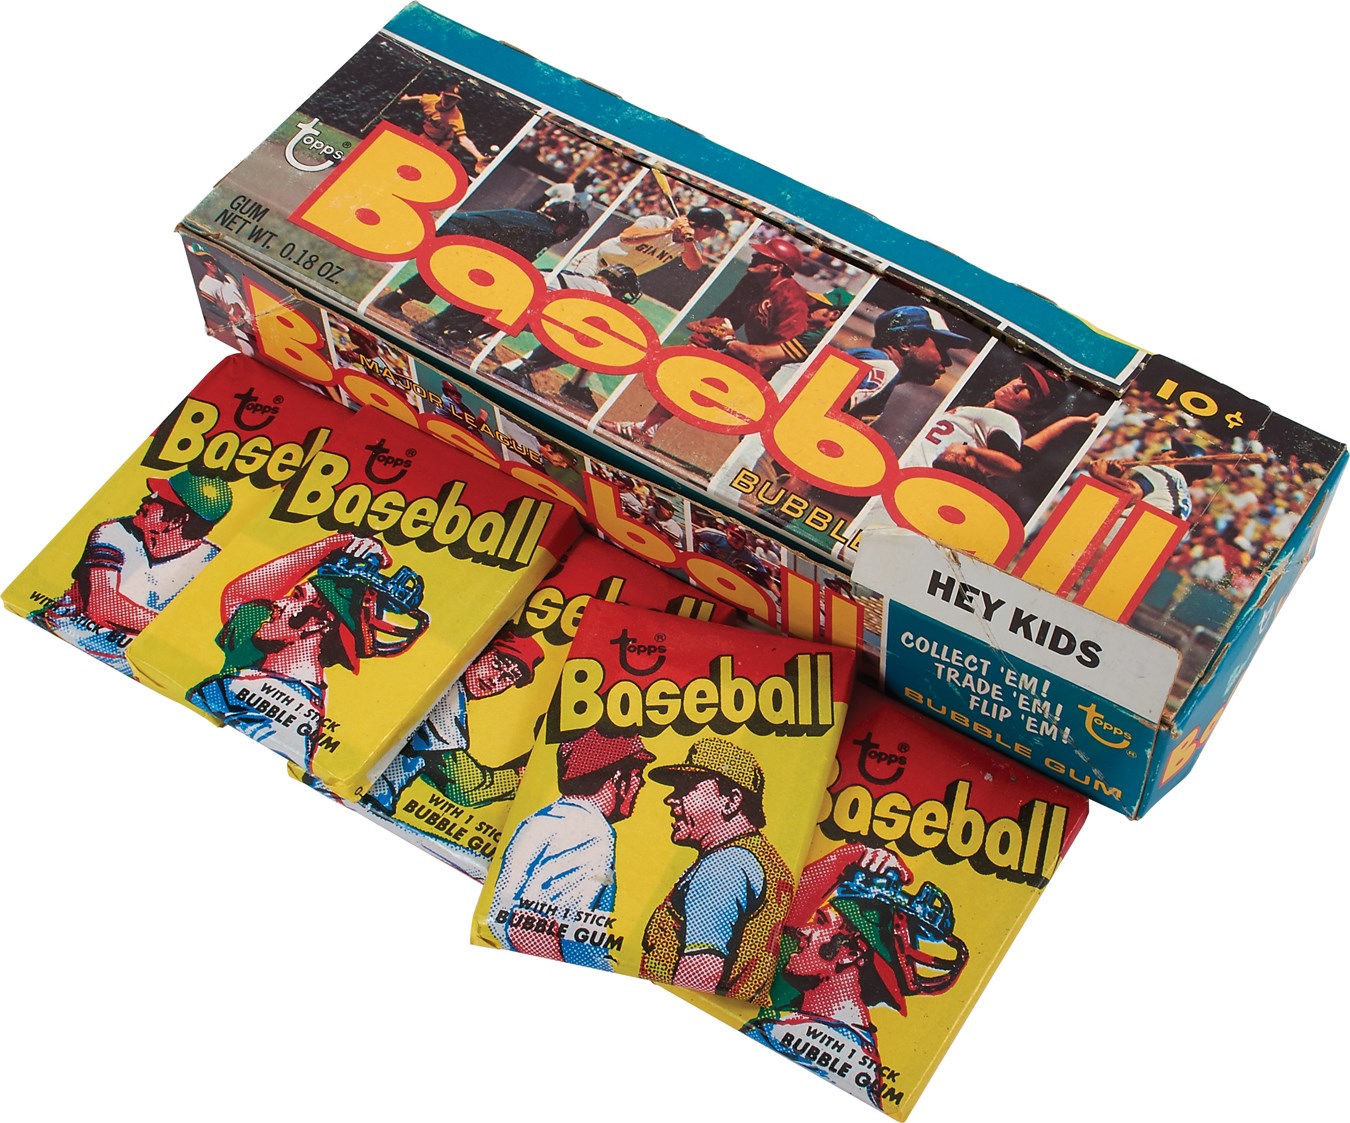 Baseball and Trading Cards - 1973 Topps Baseball Series 2 Wax Box with 24 Unopened Packs